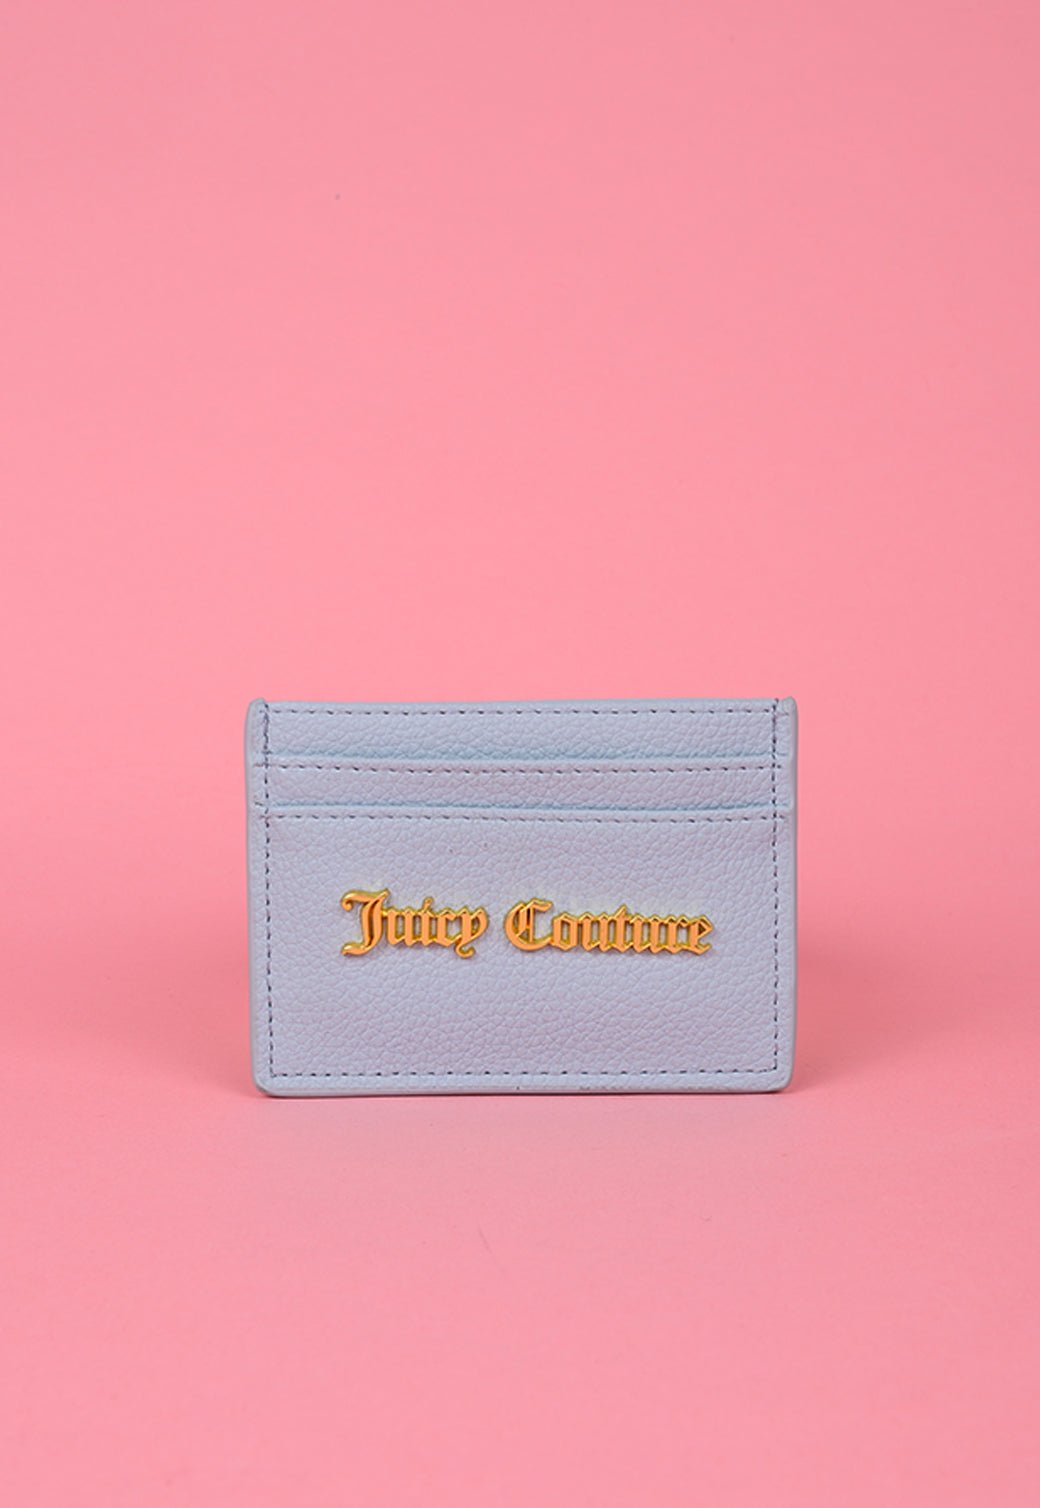 ארנק כרטיסים סוזן - Juicy Couture